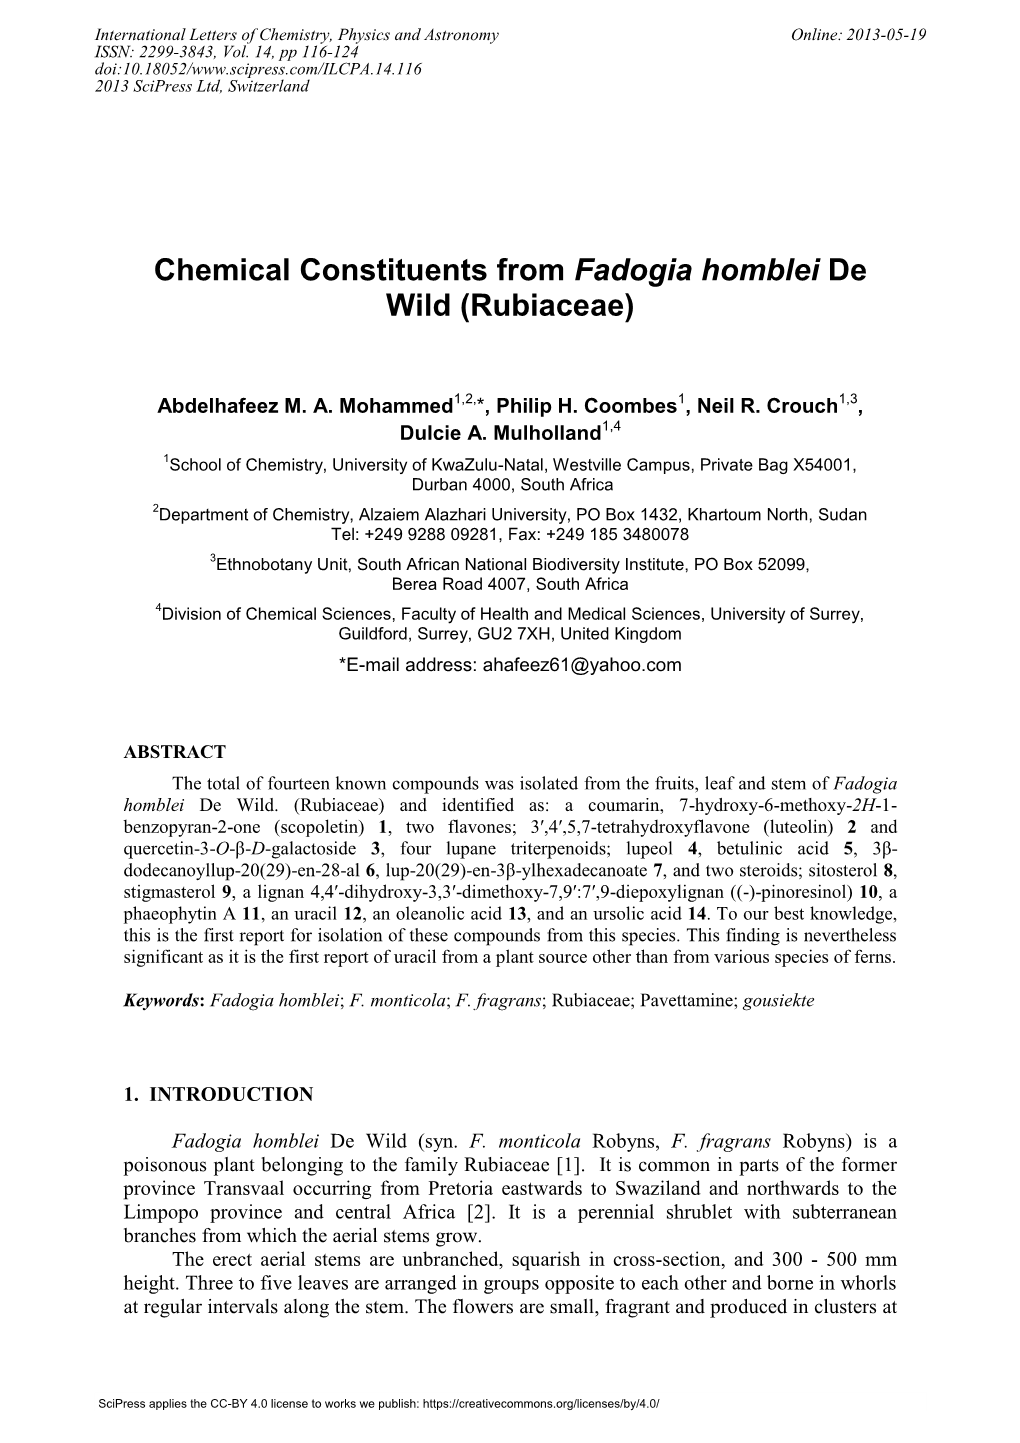 Chemical Constituents from Fadogia Homblei De Wild (Rubiaceae)